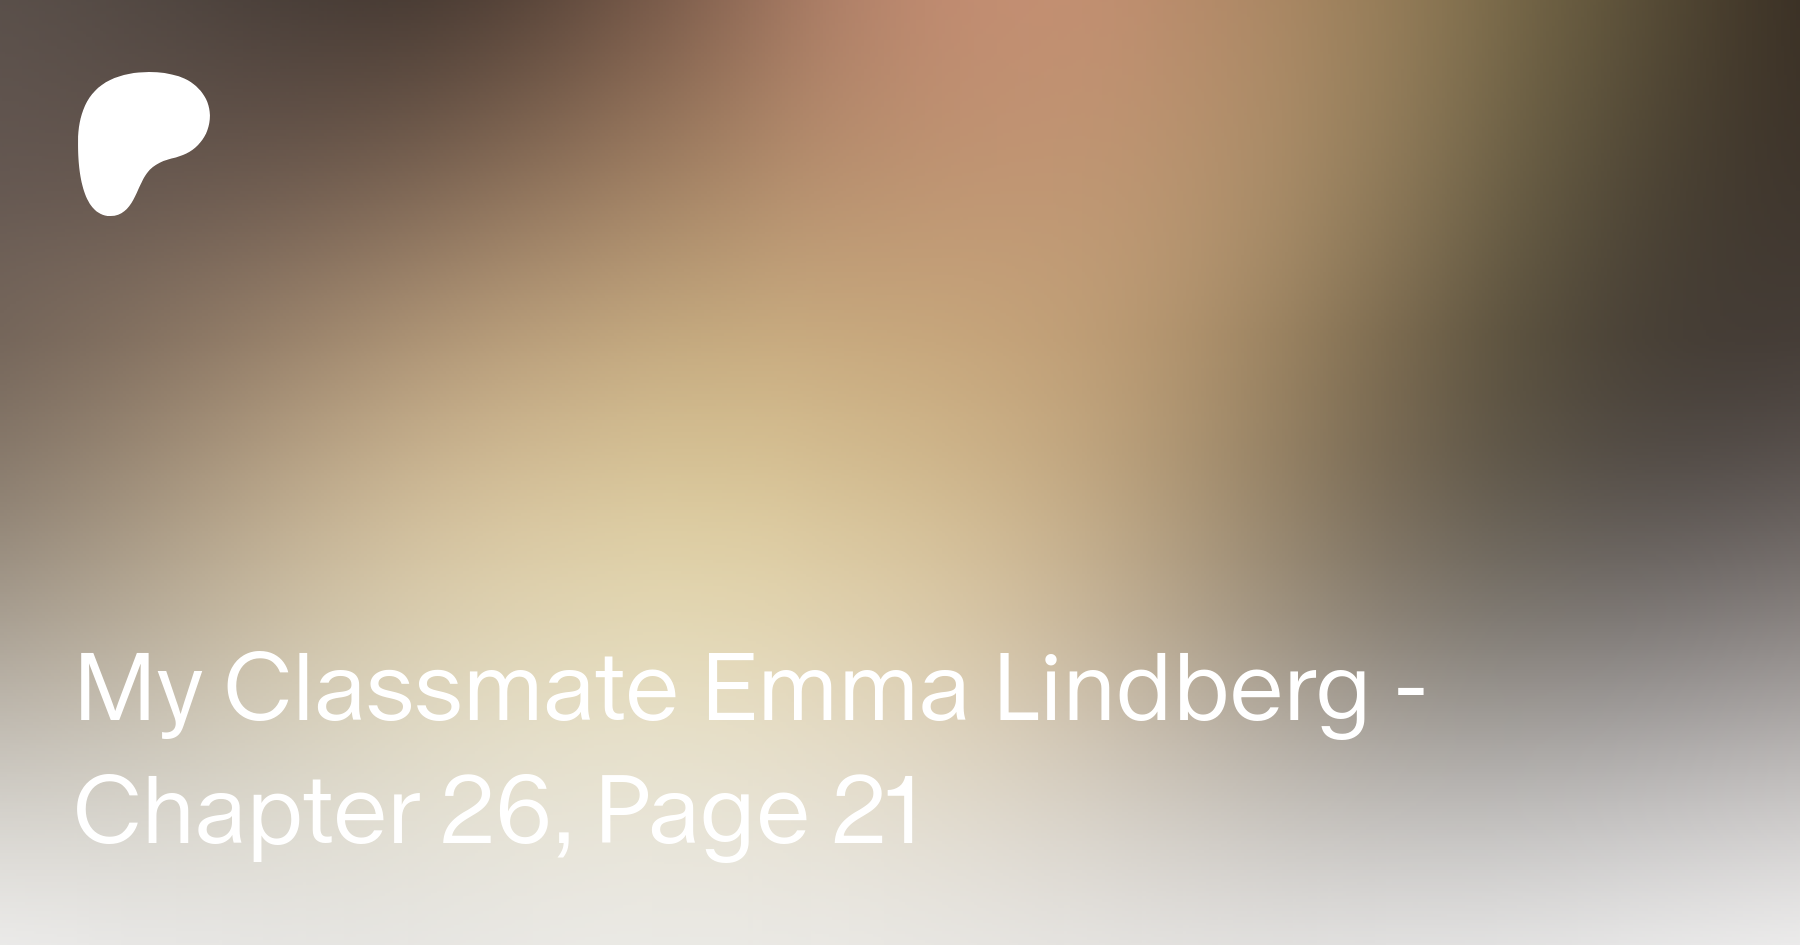 My classmate emma lindberg